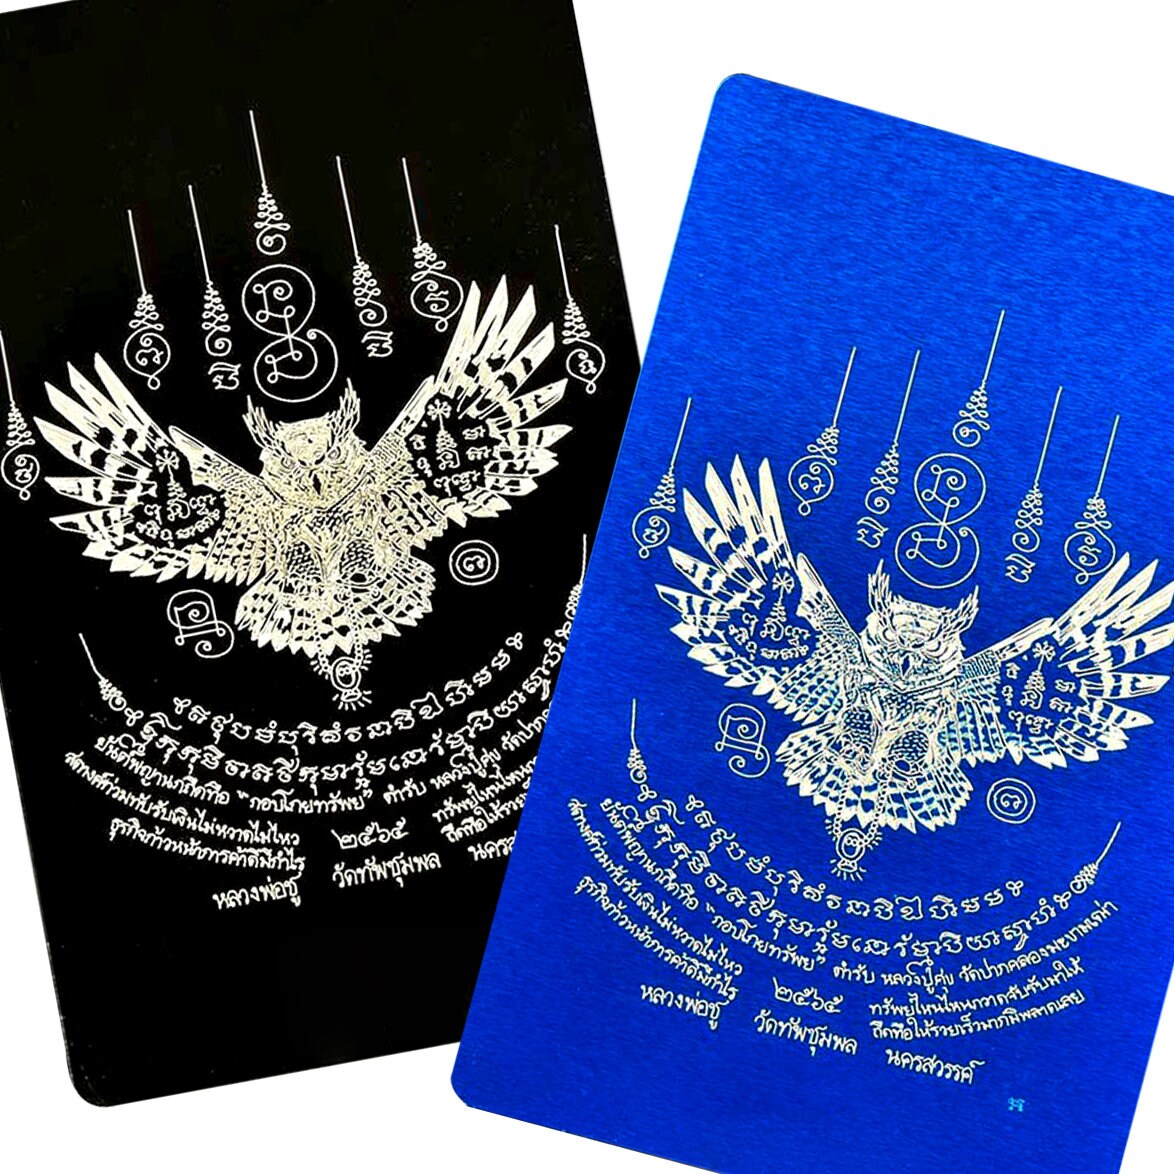 Owl Magic Talisman (Nok Terd Ter Riak Sap) Luang pho Chu, Thap Chumphon Temple Material = Aluminium size 5.5*9.0 cm